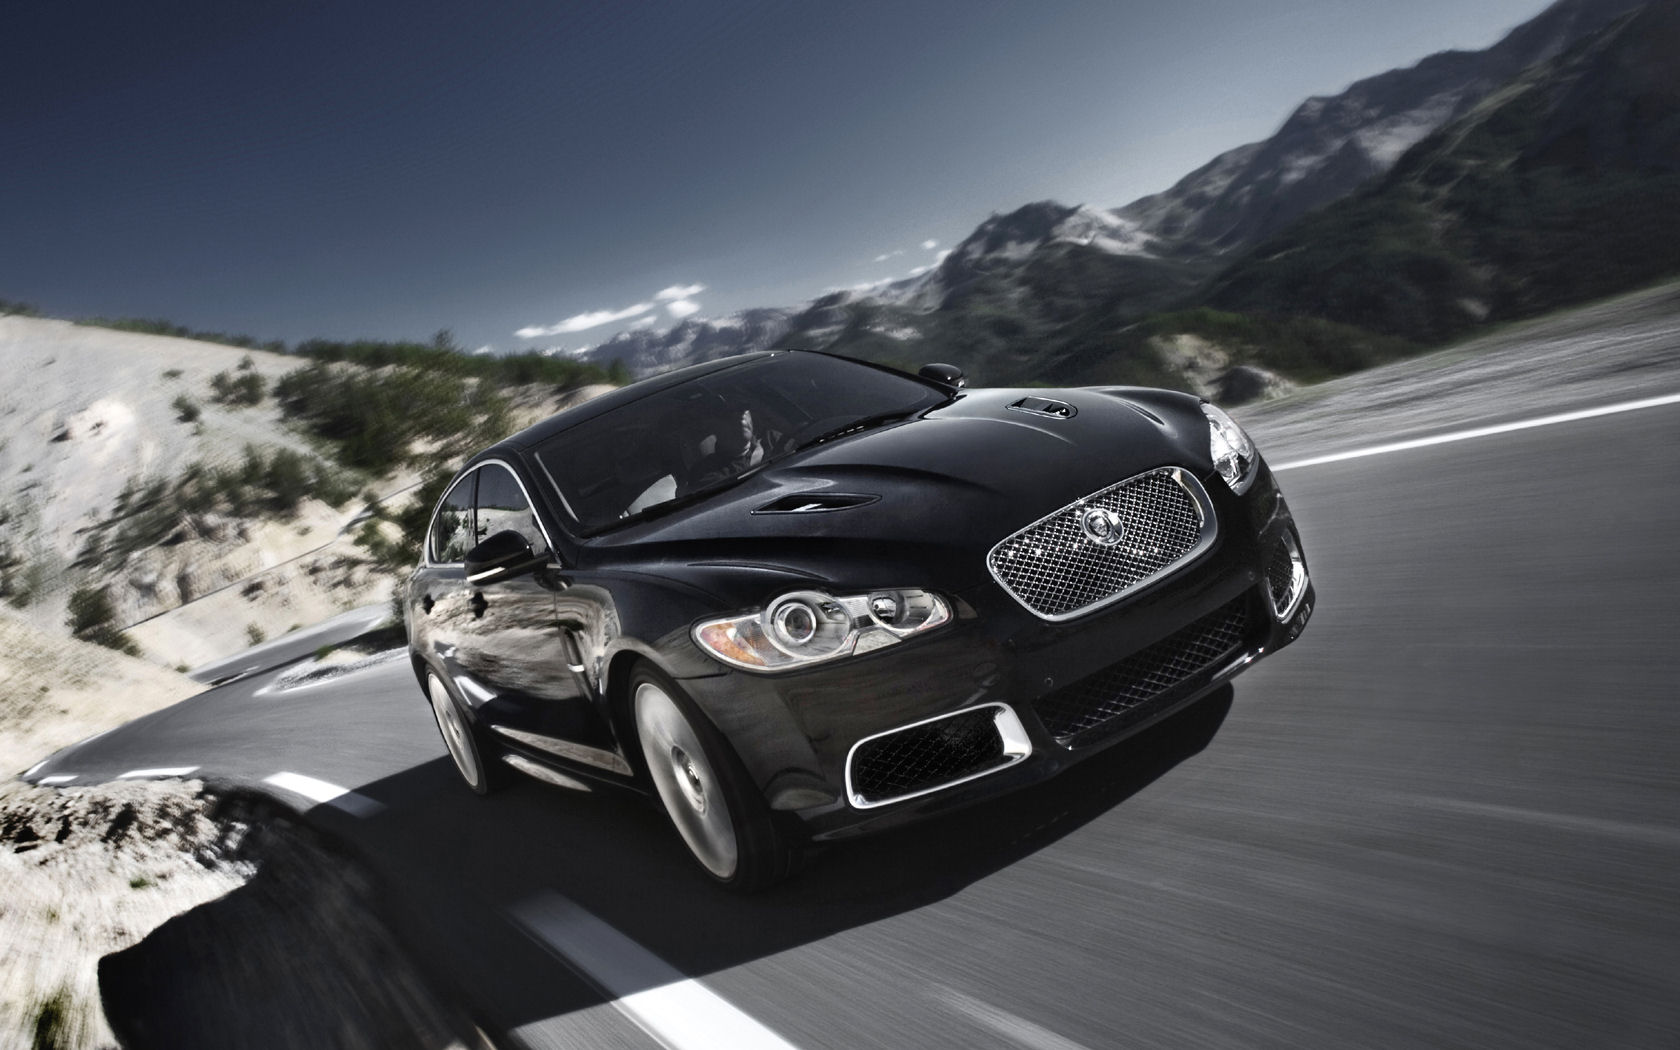 Jaguar XF 4.2, 5.0 Supercharged, XFR - Free Widescreen ...